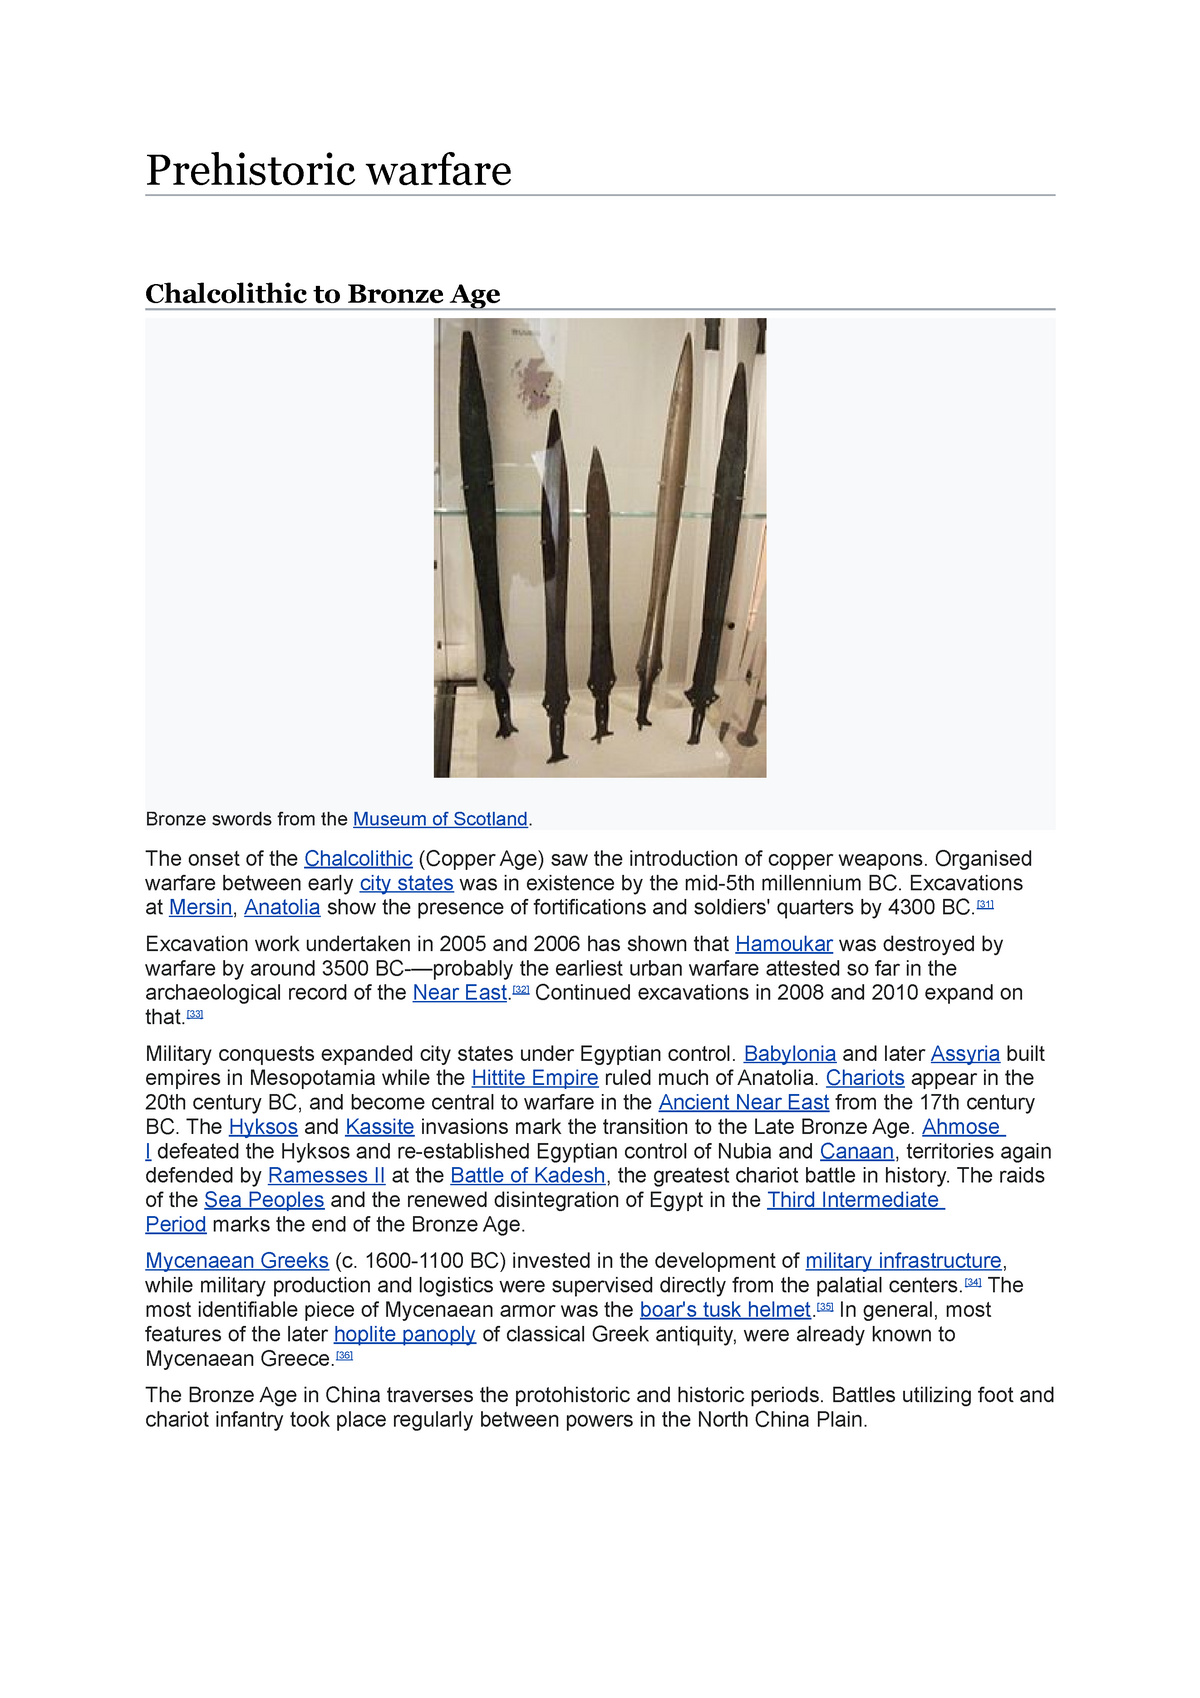 Lang T kranium Historic warfare 04 - History regarding human across age War - Prehistoric  warfare Chalcolithic to - Studocu